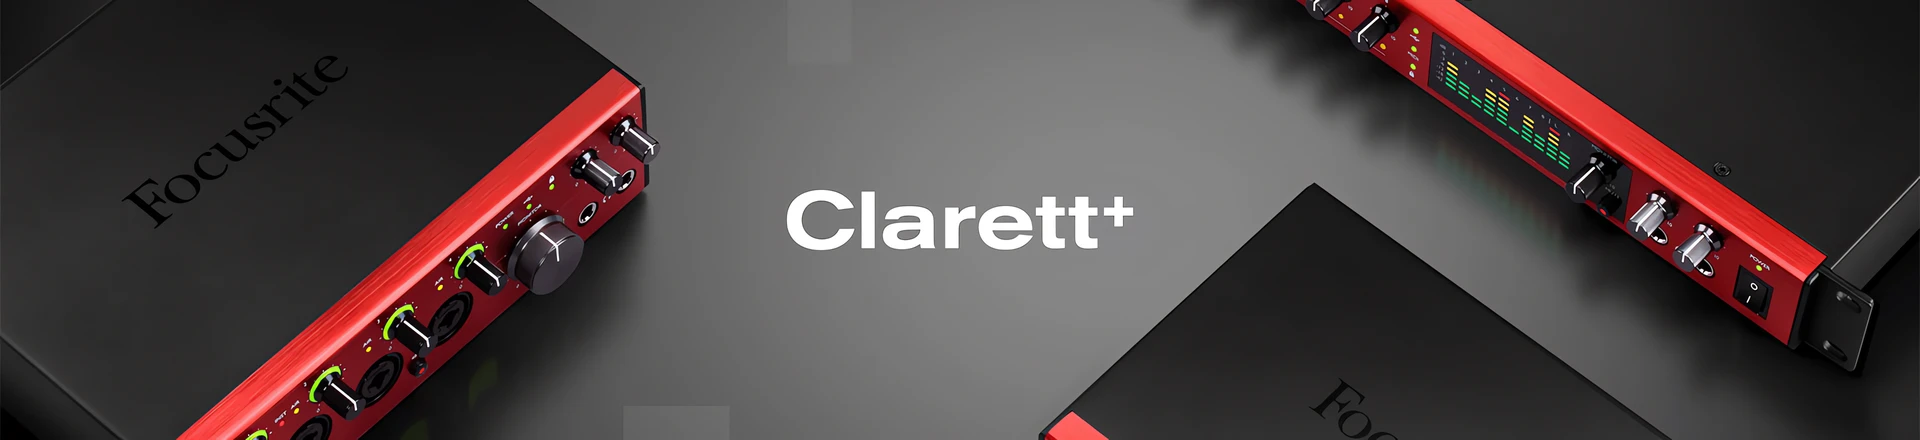 Focusrite Clarett+ - nowe oblicze klarowności